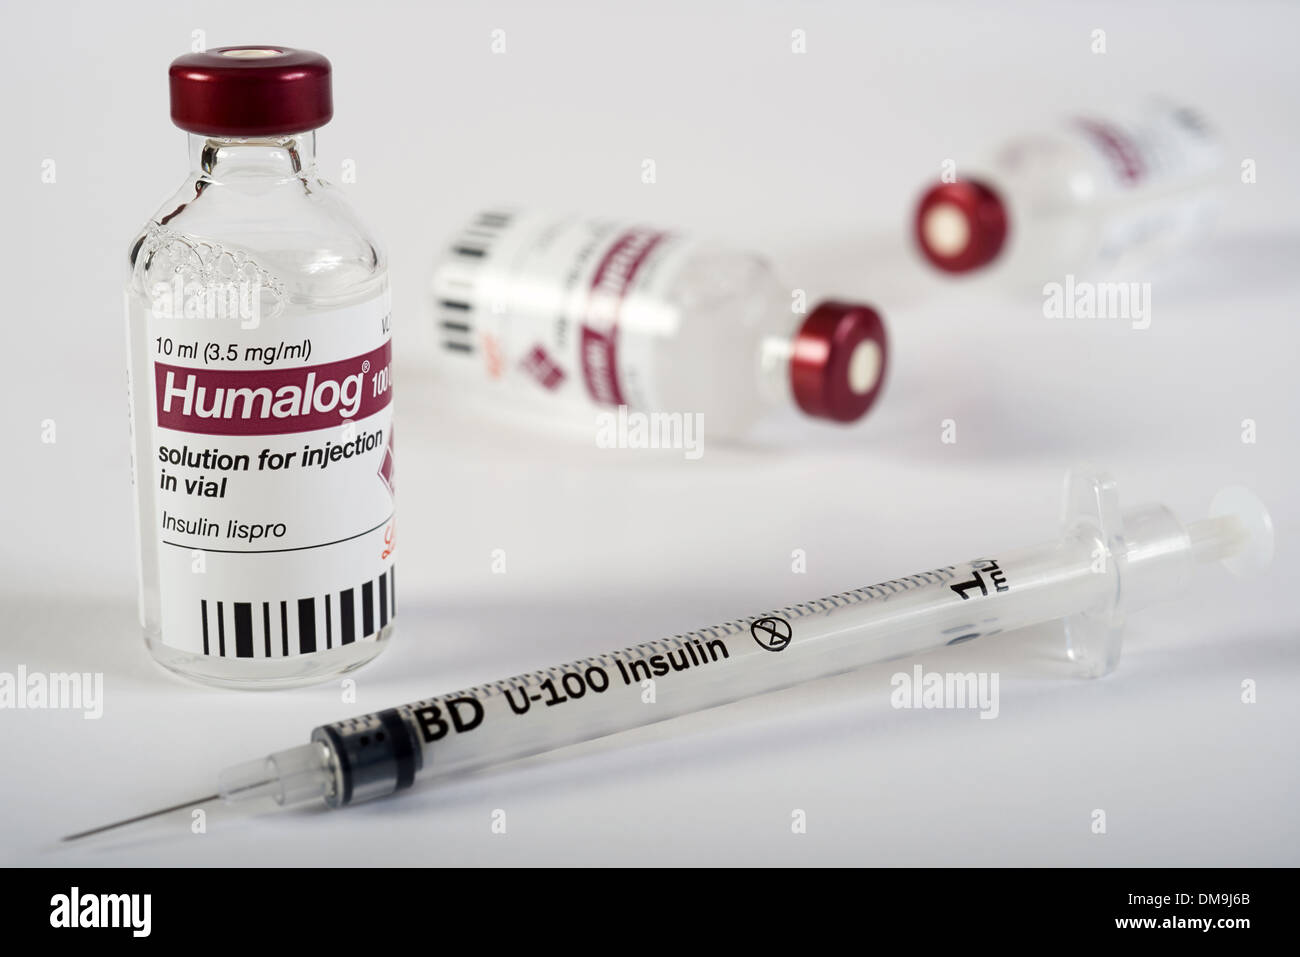 Humalog insulina lispro 10 ml flaconi Foto Stock